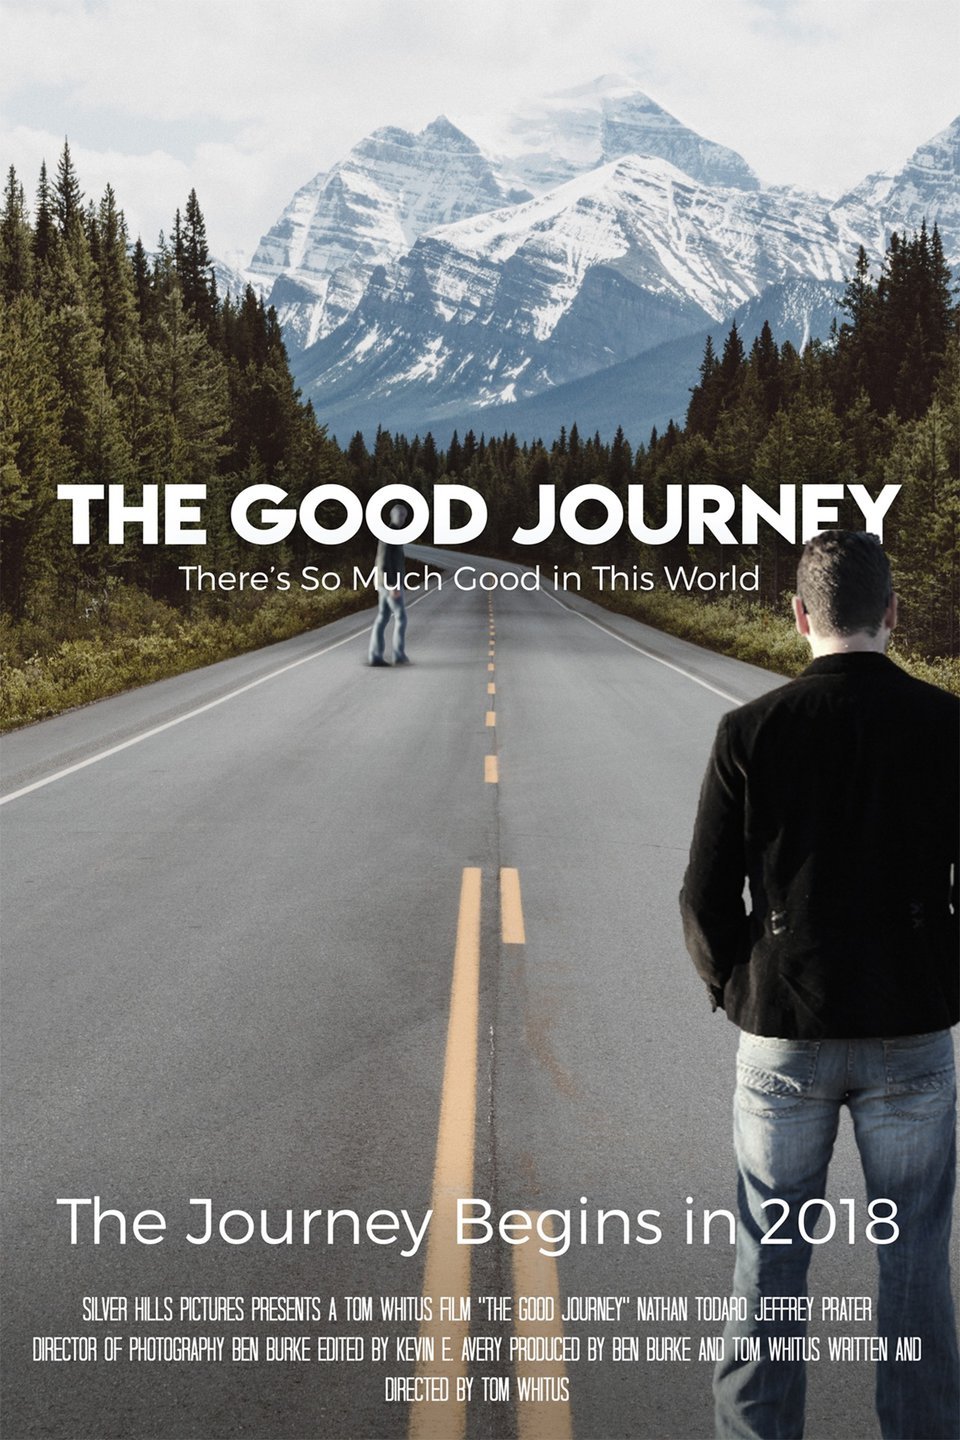 the good journey (original soundtrack) album